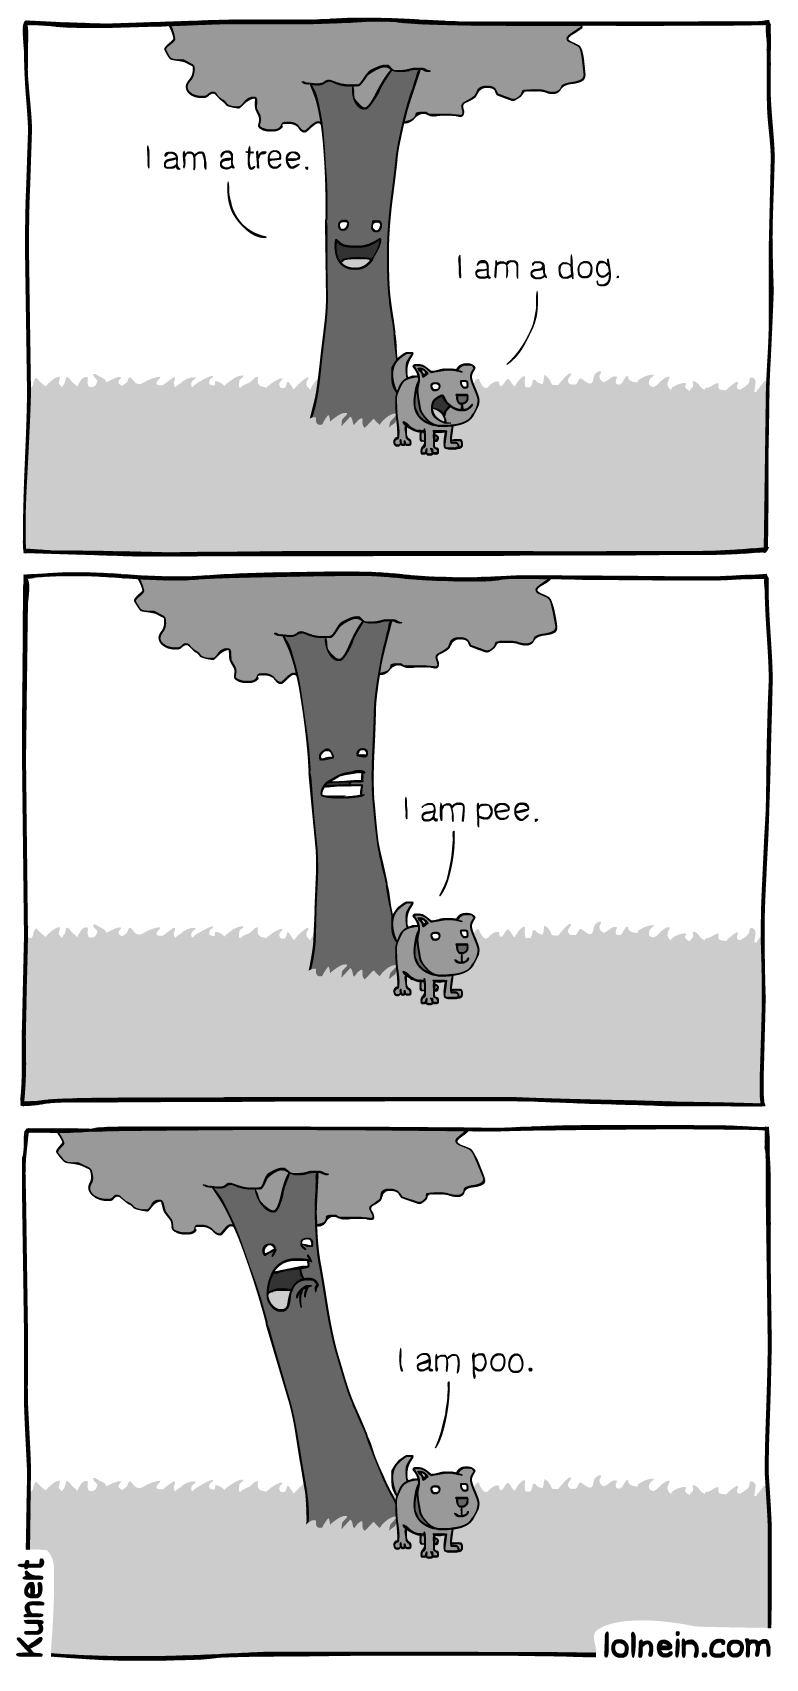 Comic: 'I am a Tree'